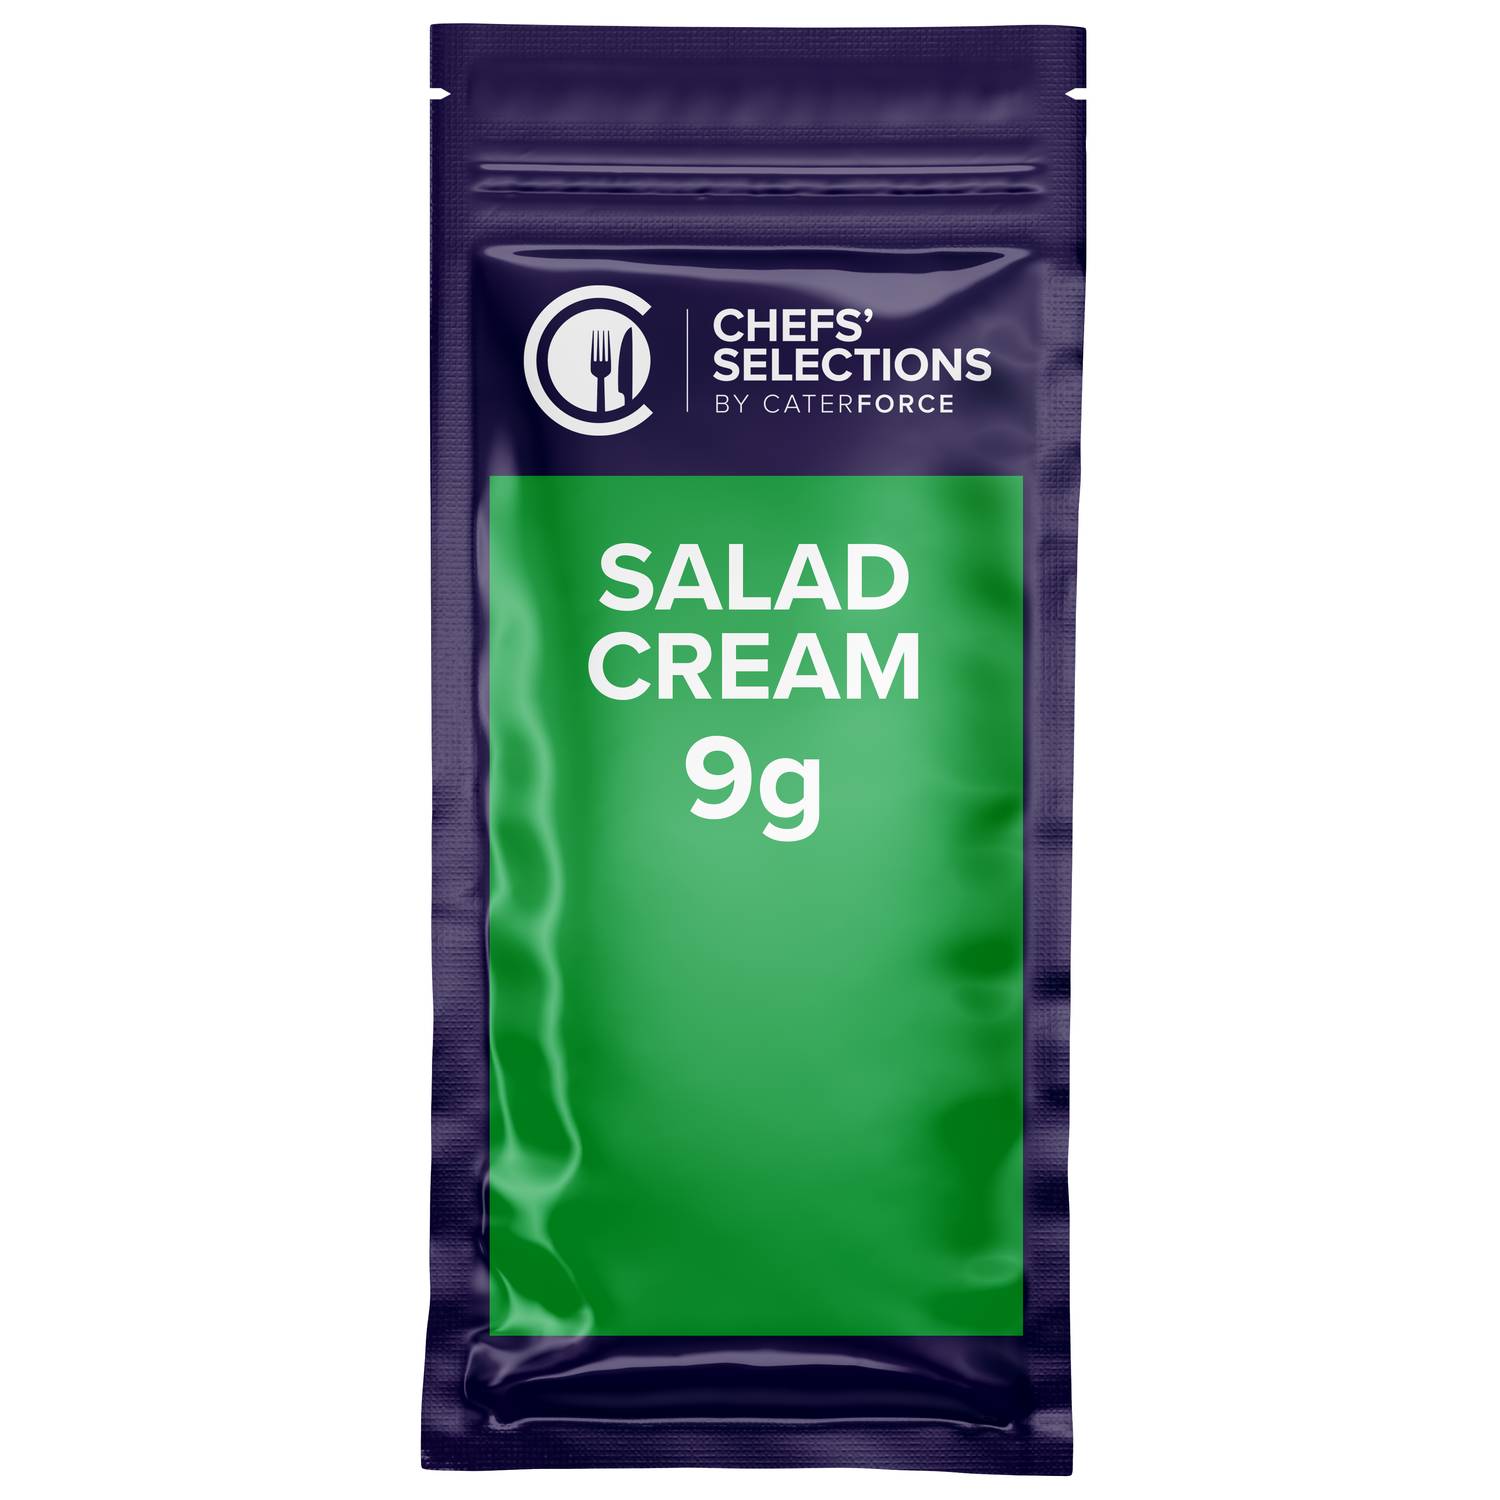 Chefs’ Selections Salad Cream Sachet (200 x 9g)